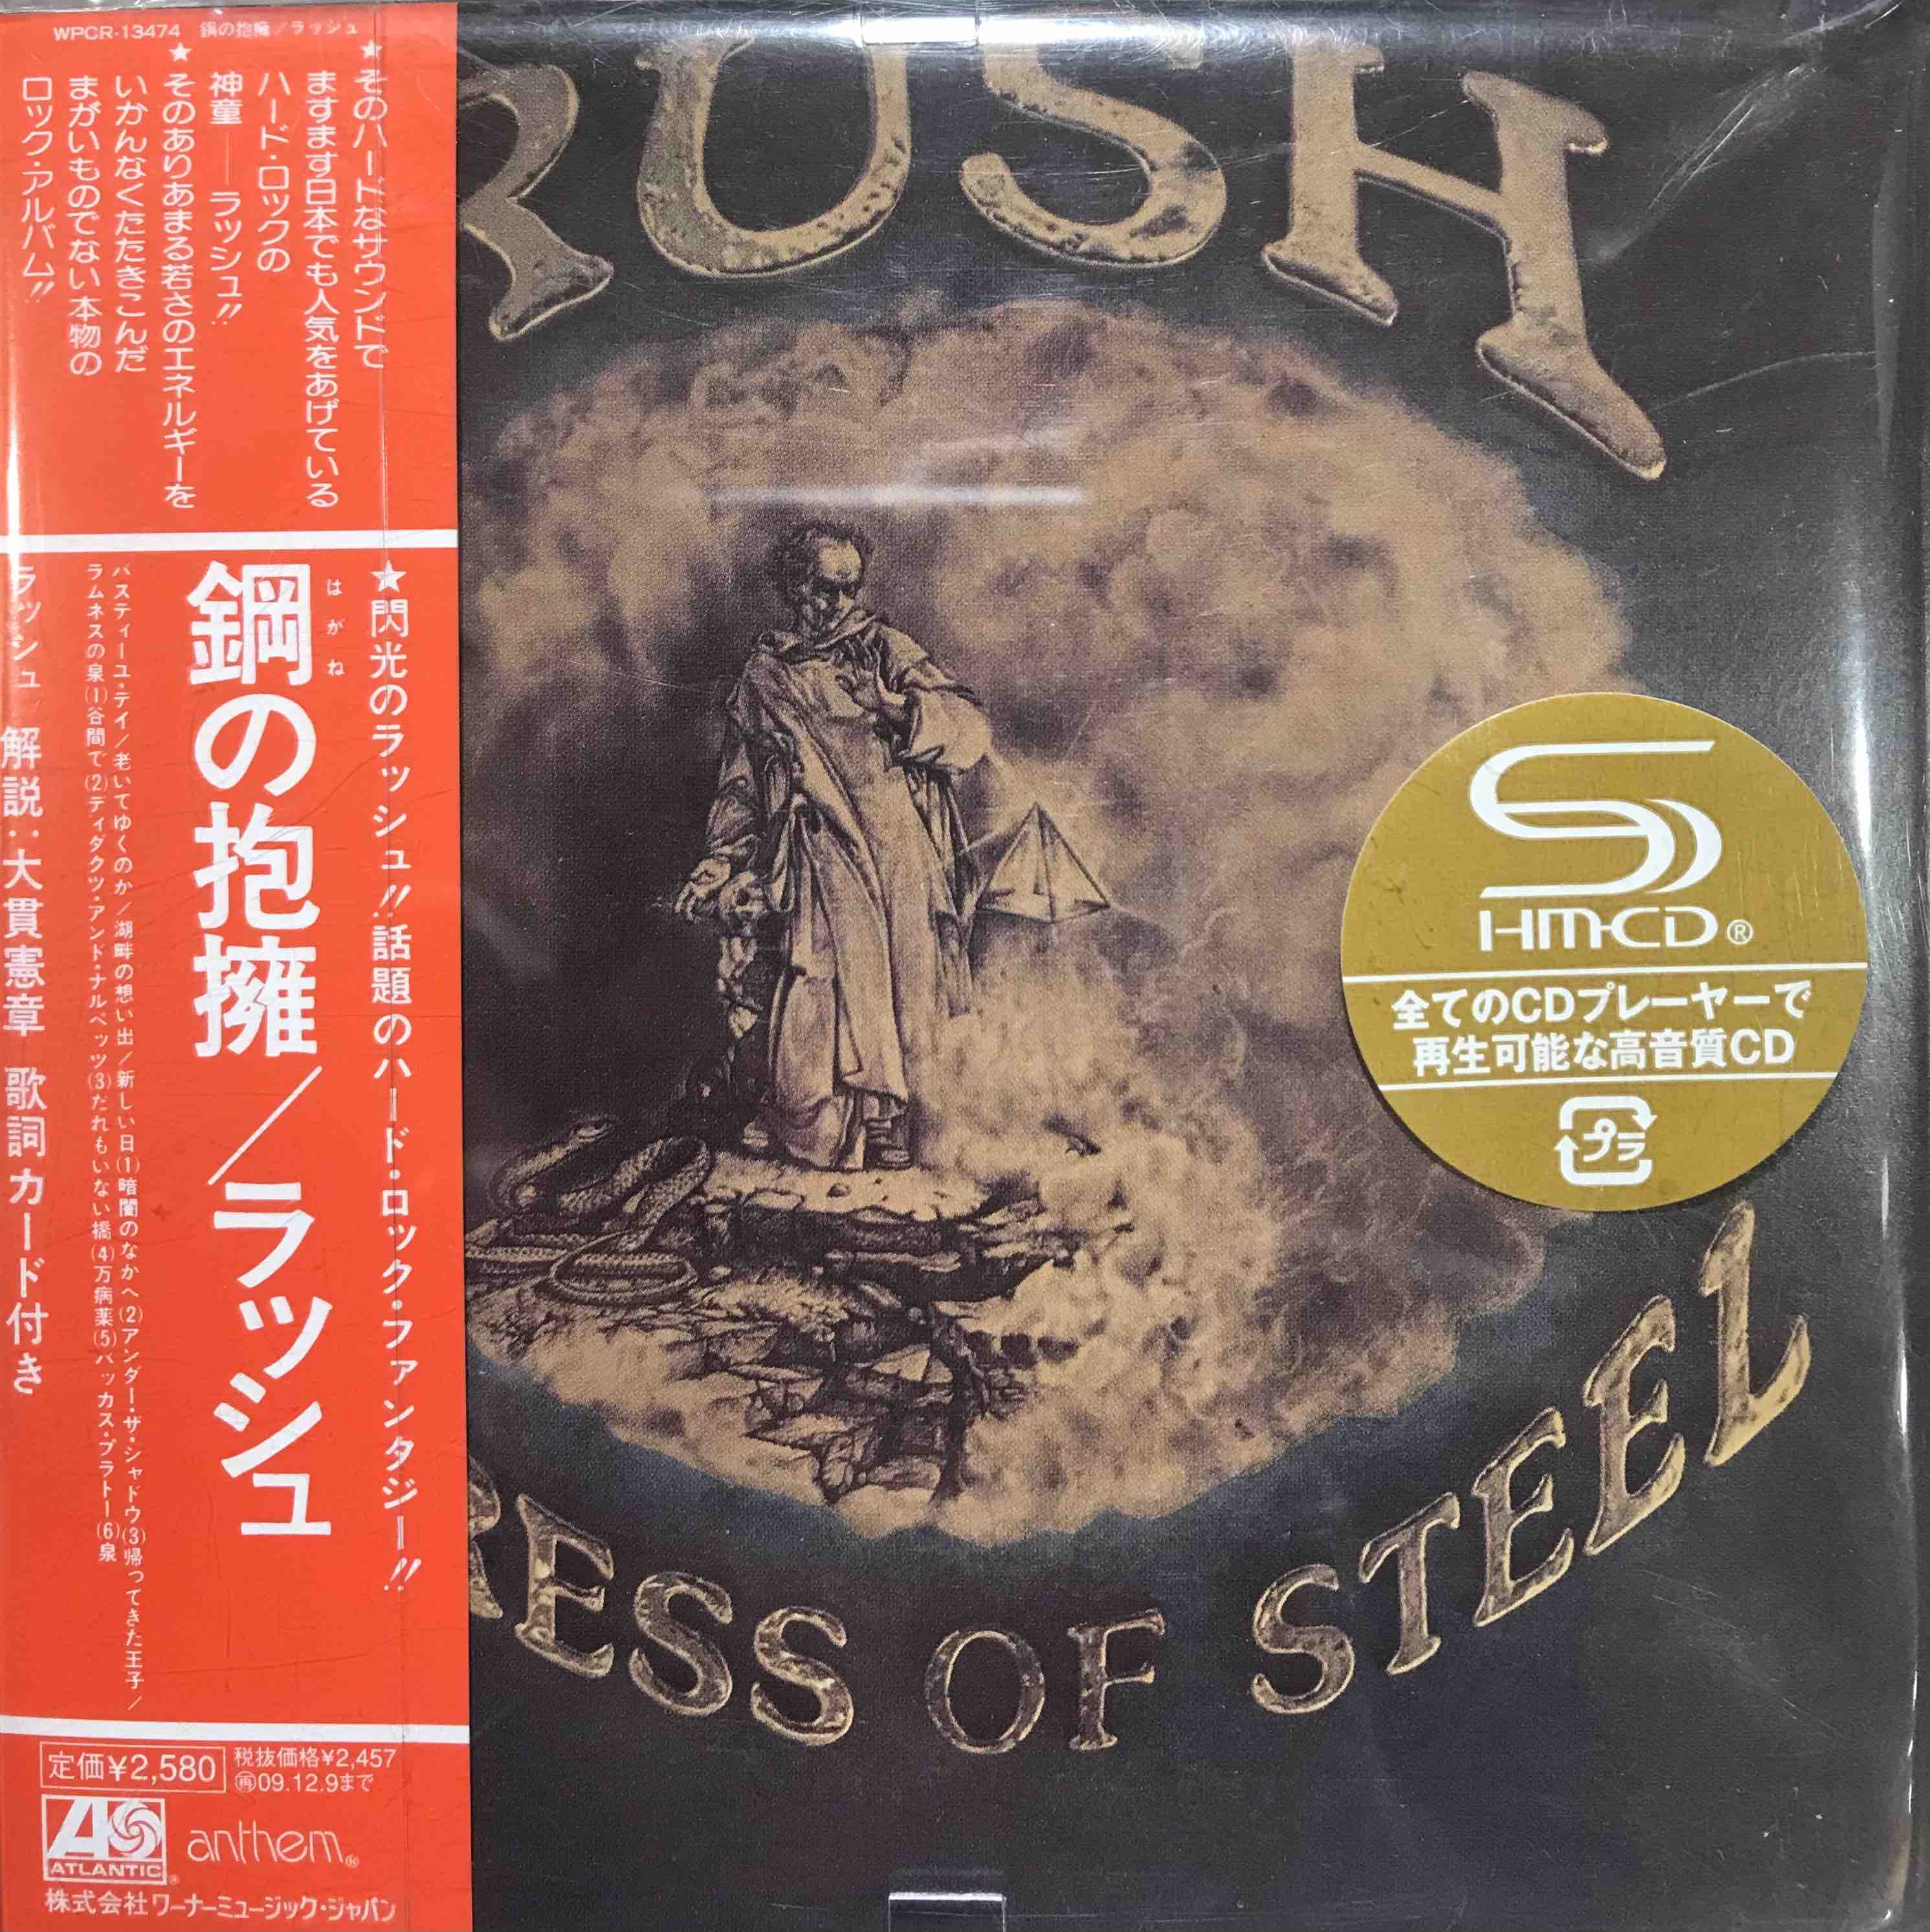 Rush ‎– Caress Of Steel